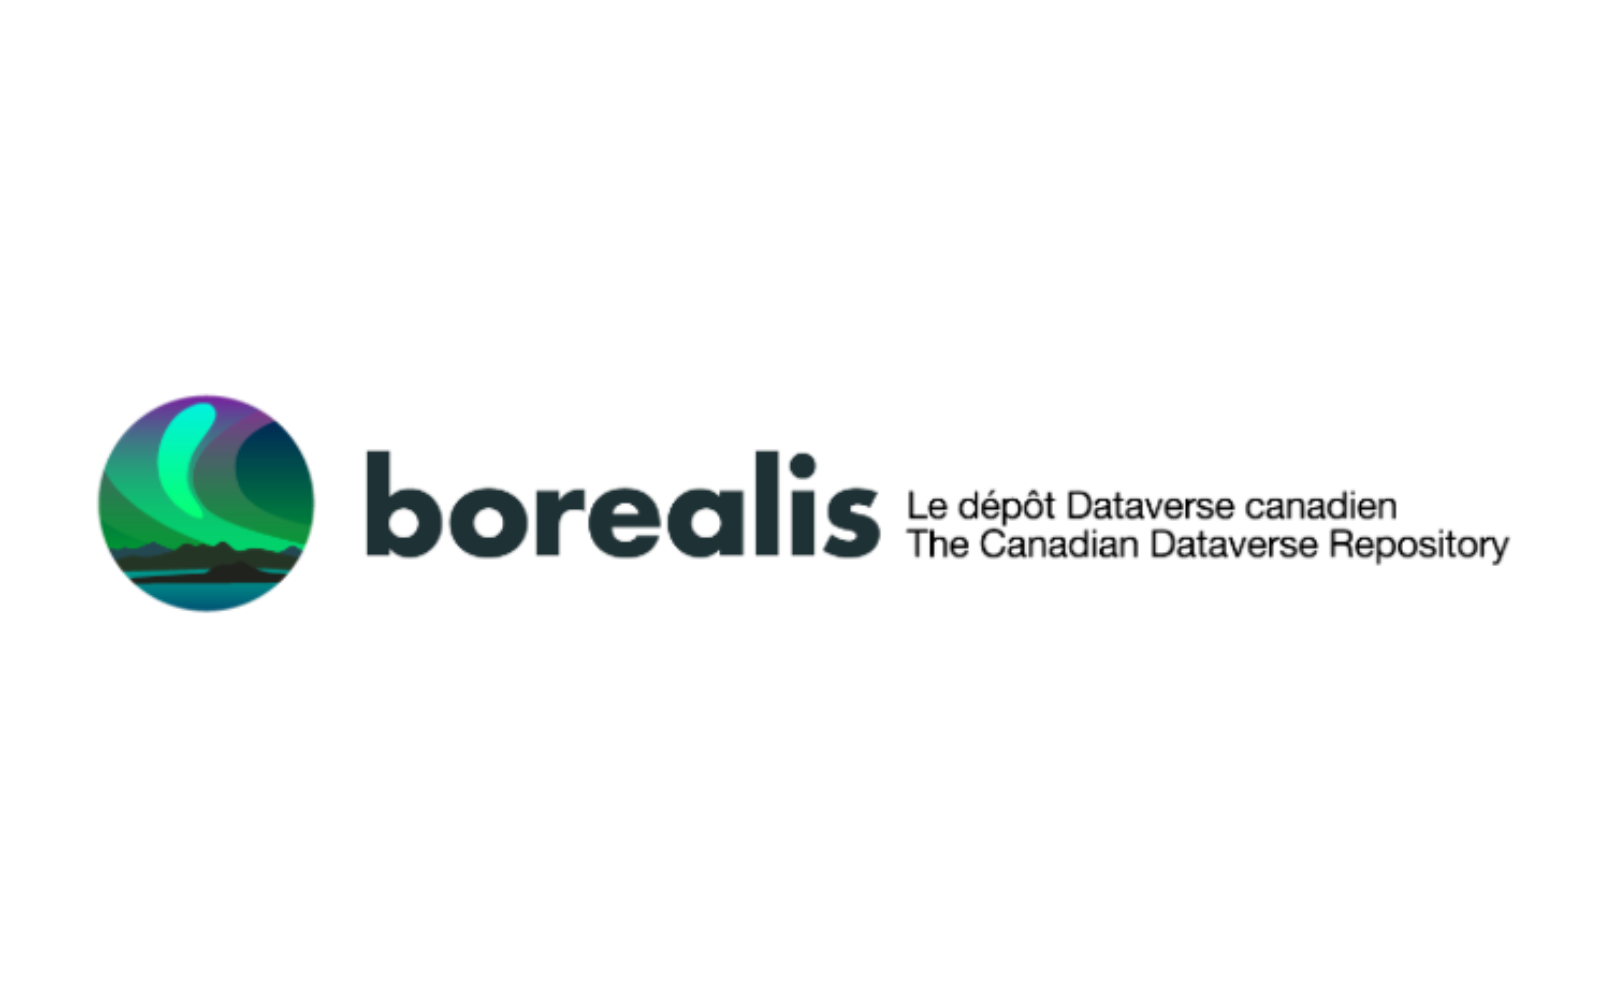 Borealis The Canadian Dataverse Repository logo.